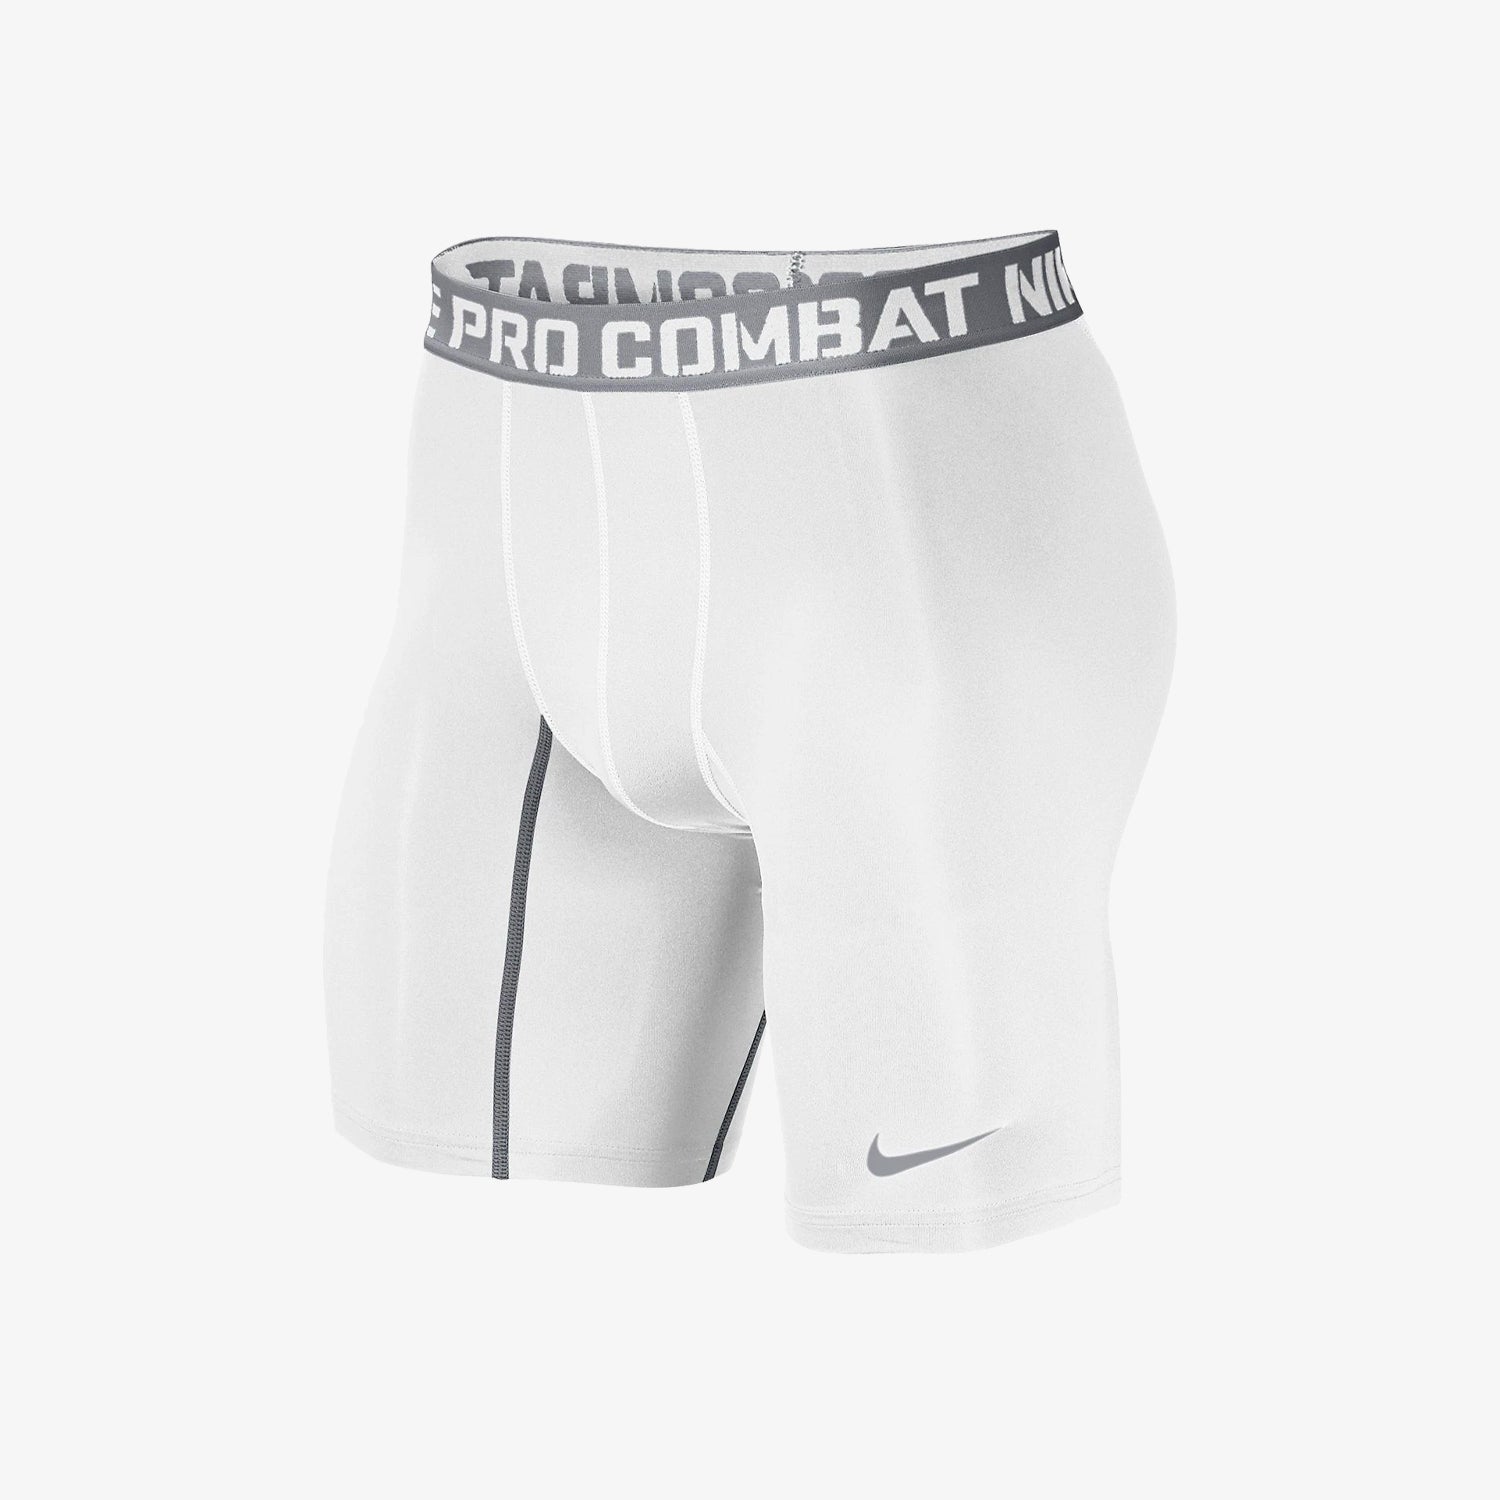 Pro Combat Compression 6" Men's Shorts White